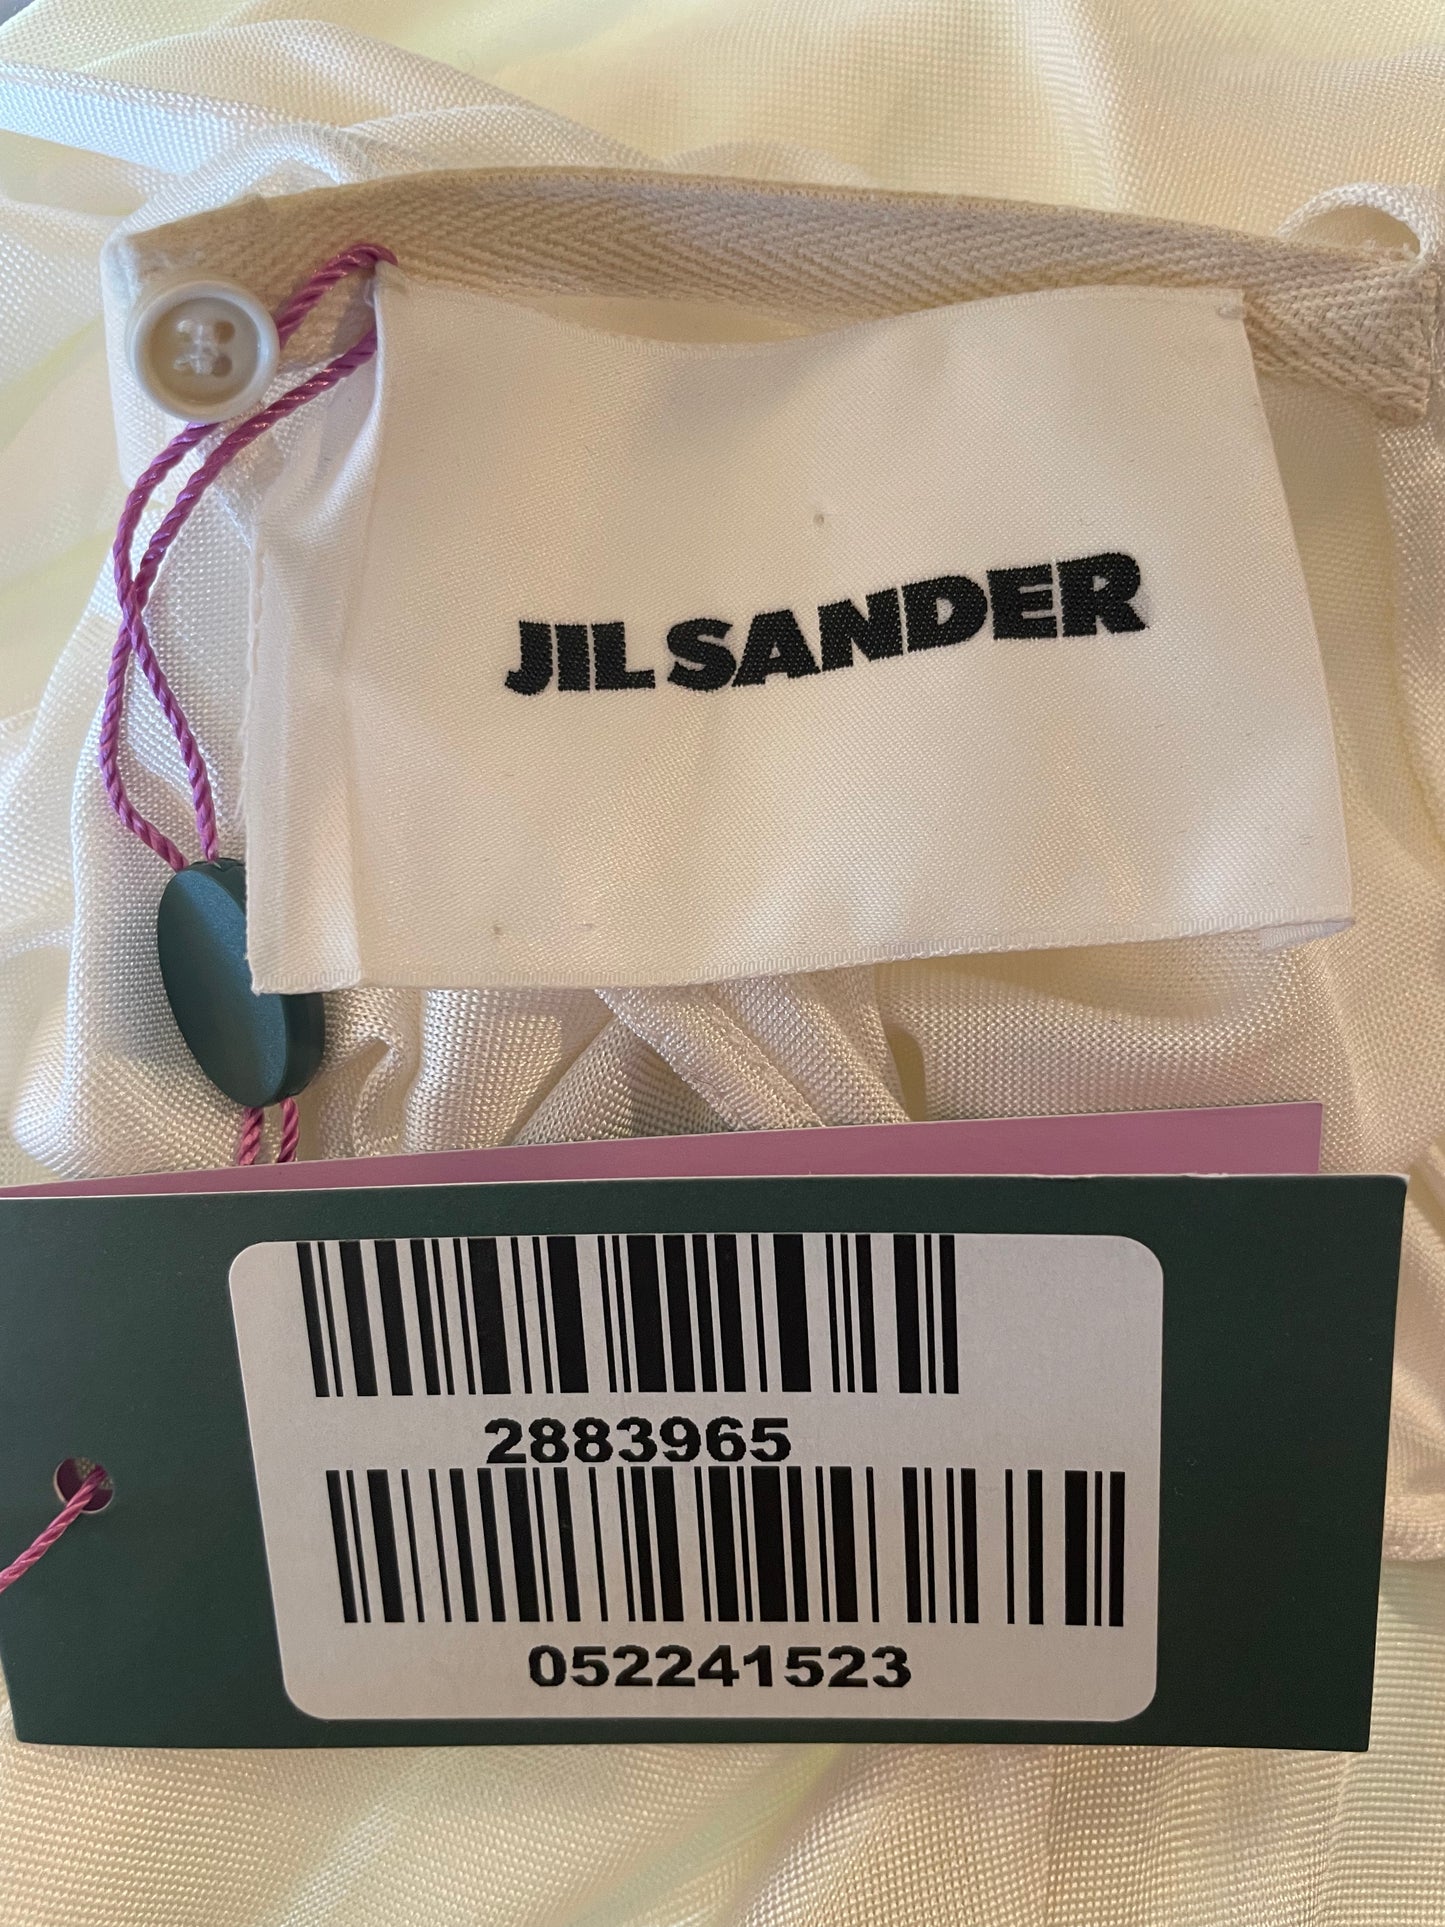 Jil Sander Spring 2020 Silk White Gown